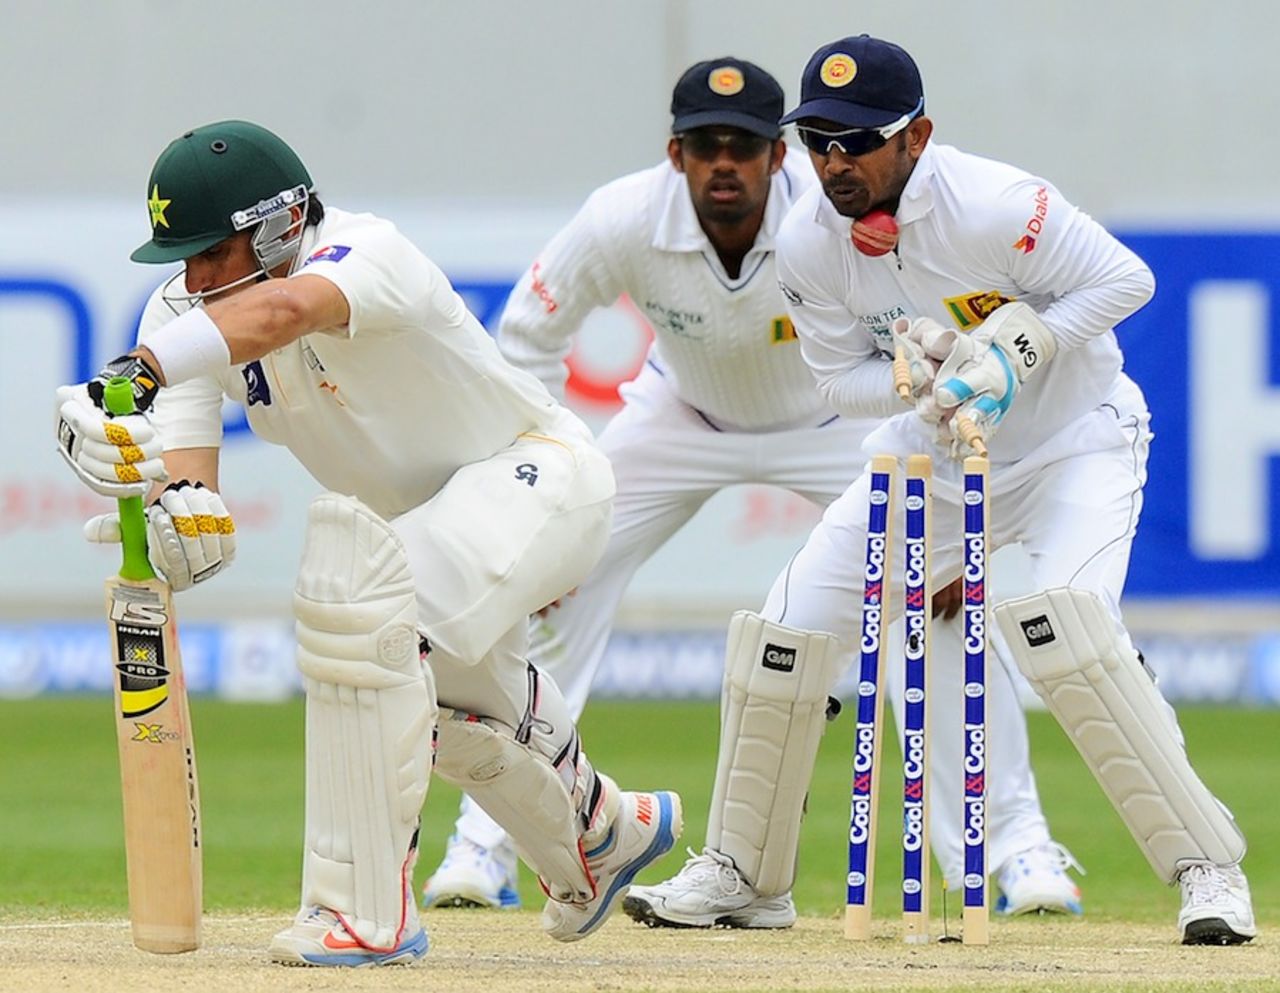 Misbah-ul-Haq was bowled by Rangana Herath, Pakistan v Sri Lanka, 2nd Test, Dubai, 4th day, January 11, 2014